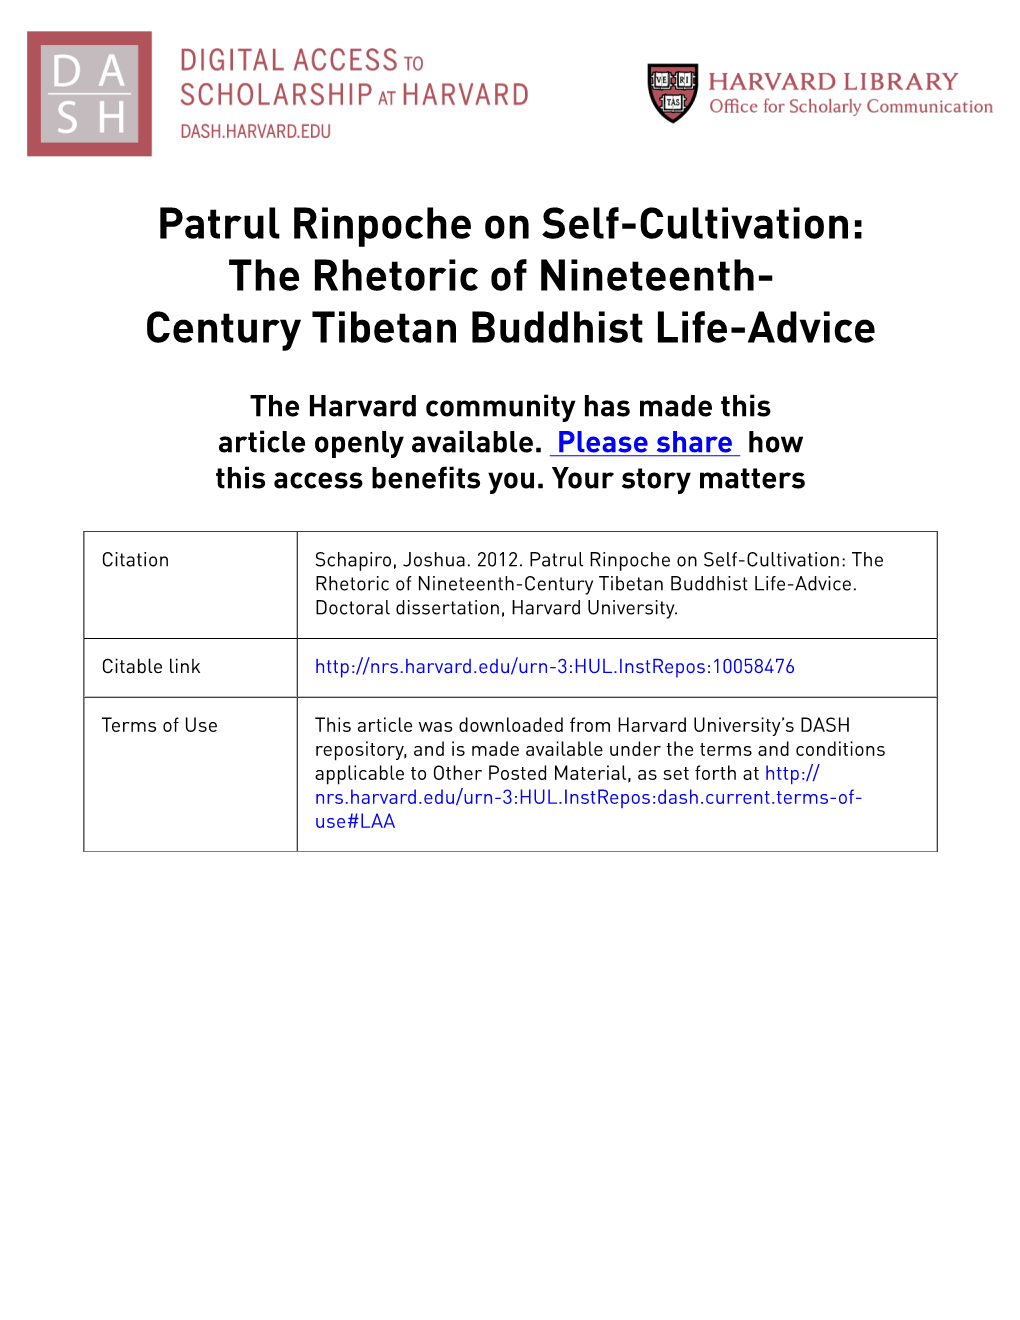 Patrul Rinpoche on Self-Cultivation: the Rhetoric of Nineteenth- Century Tibetan Buddhist Life-Advice